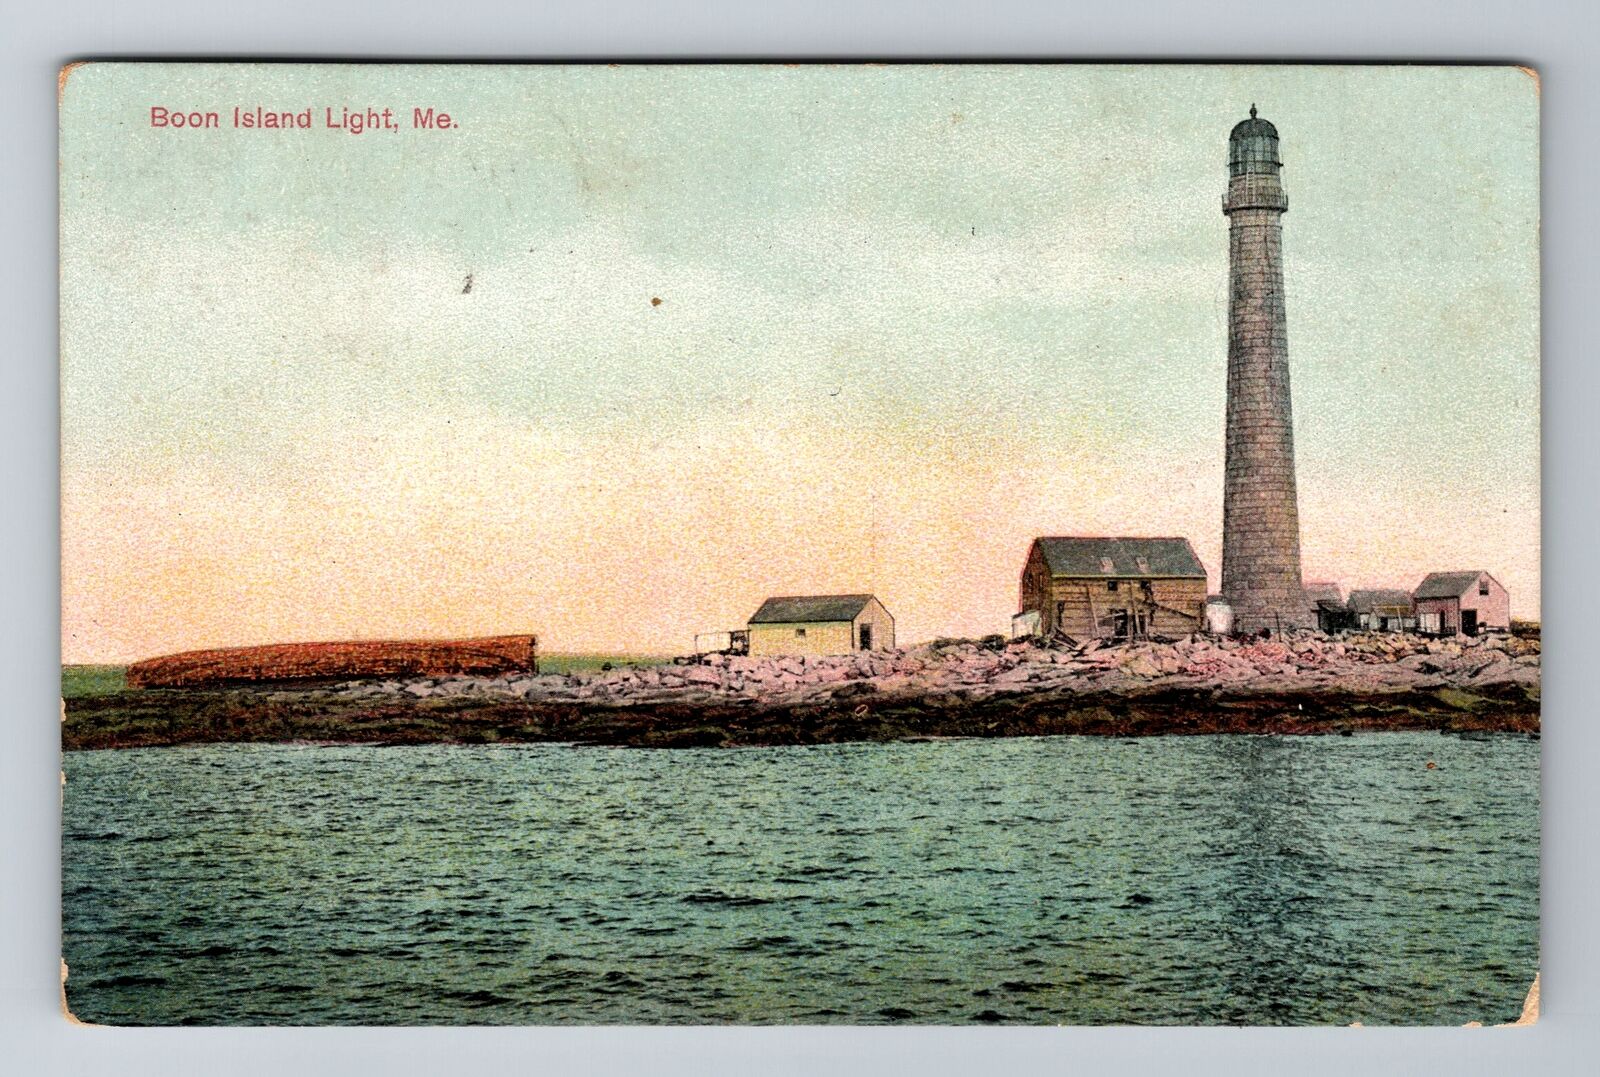 Boon Island, ME-Maine, Boon Island Light House c1910, Vintage Postcard